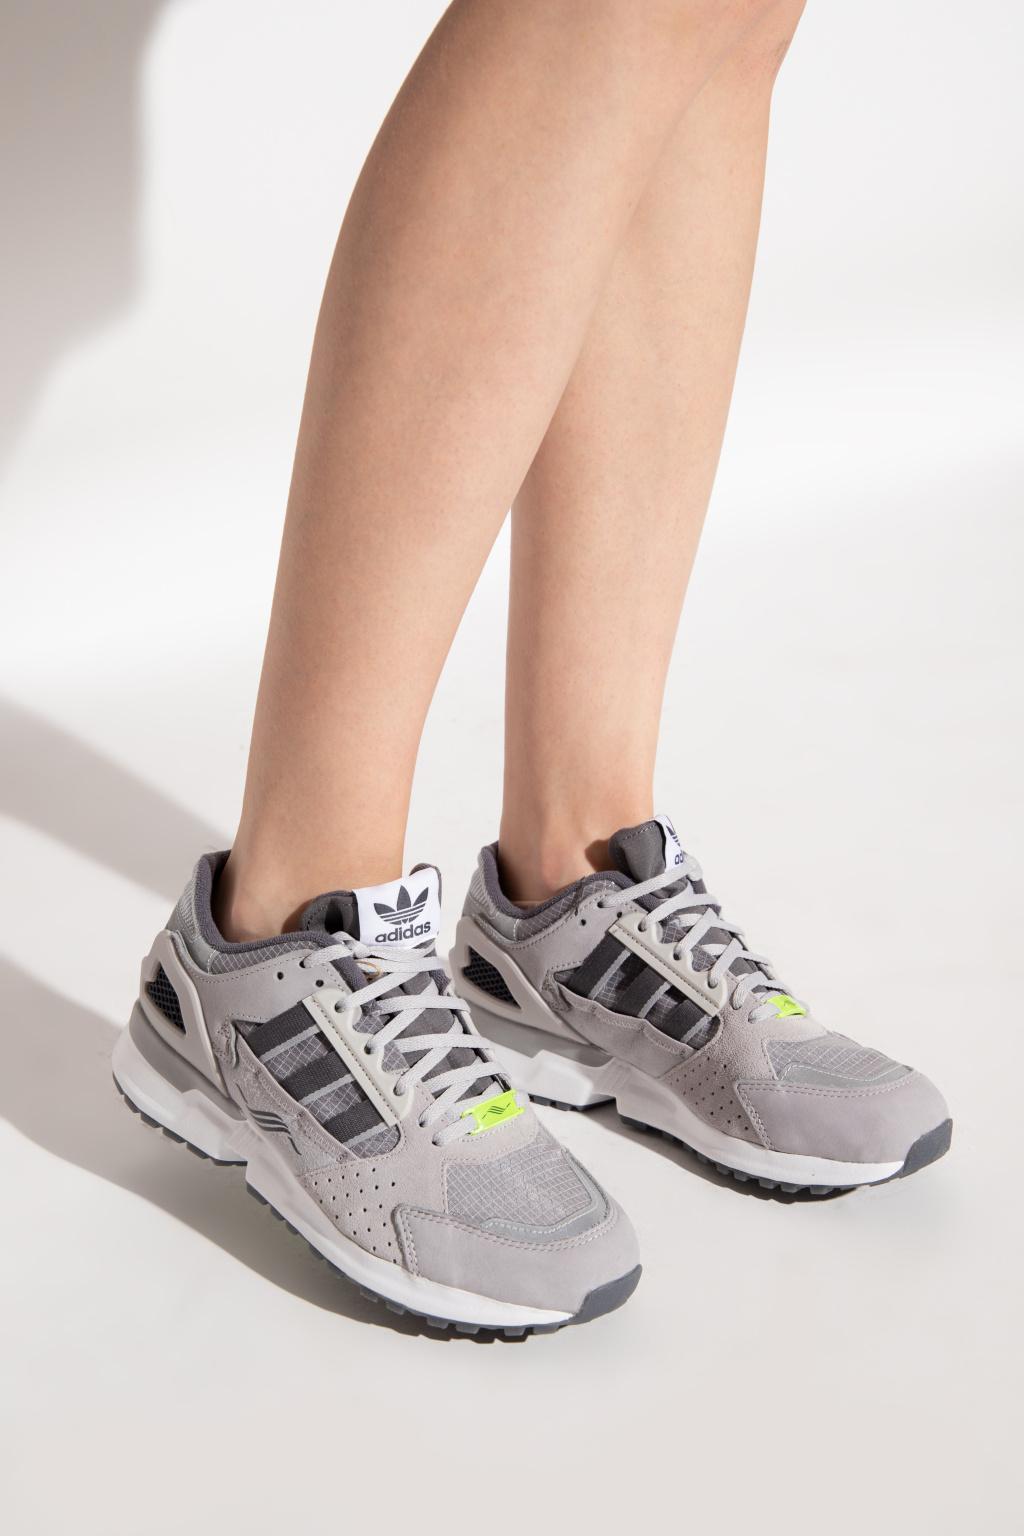 adidas Originals Rubber 'zx 10,000 C' Sneakers in Grey (Gray) - Lyst